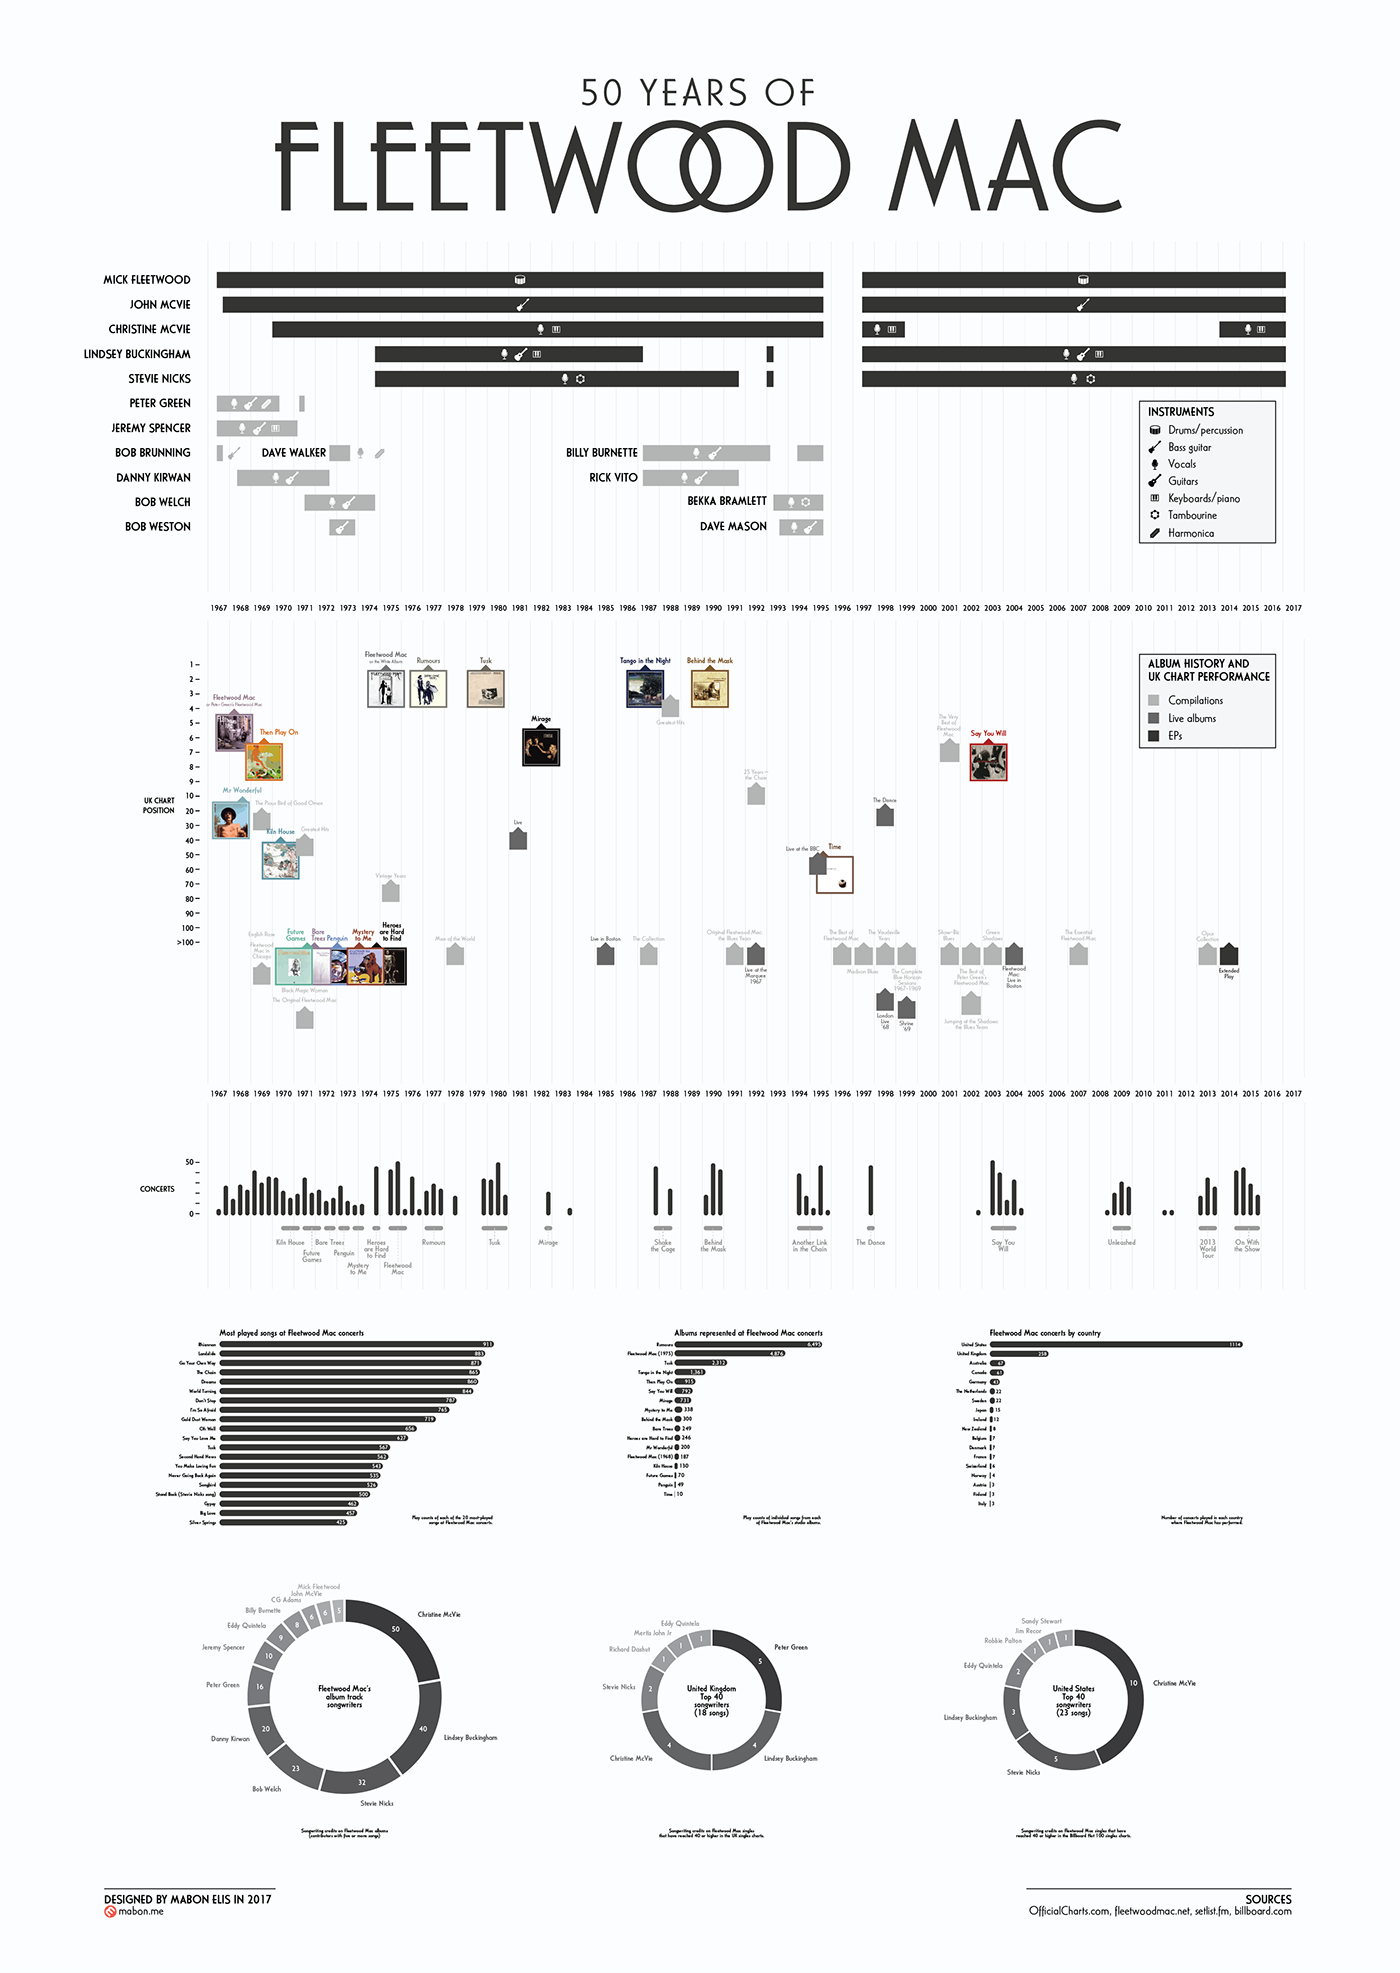 Adobe Portfolio infographic infographics music bands Data timeline history